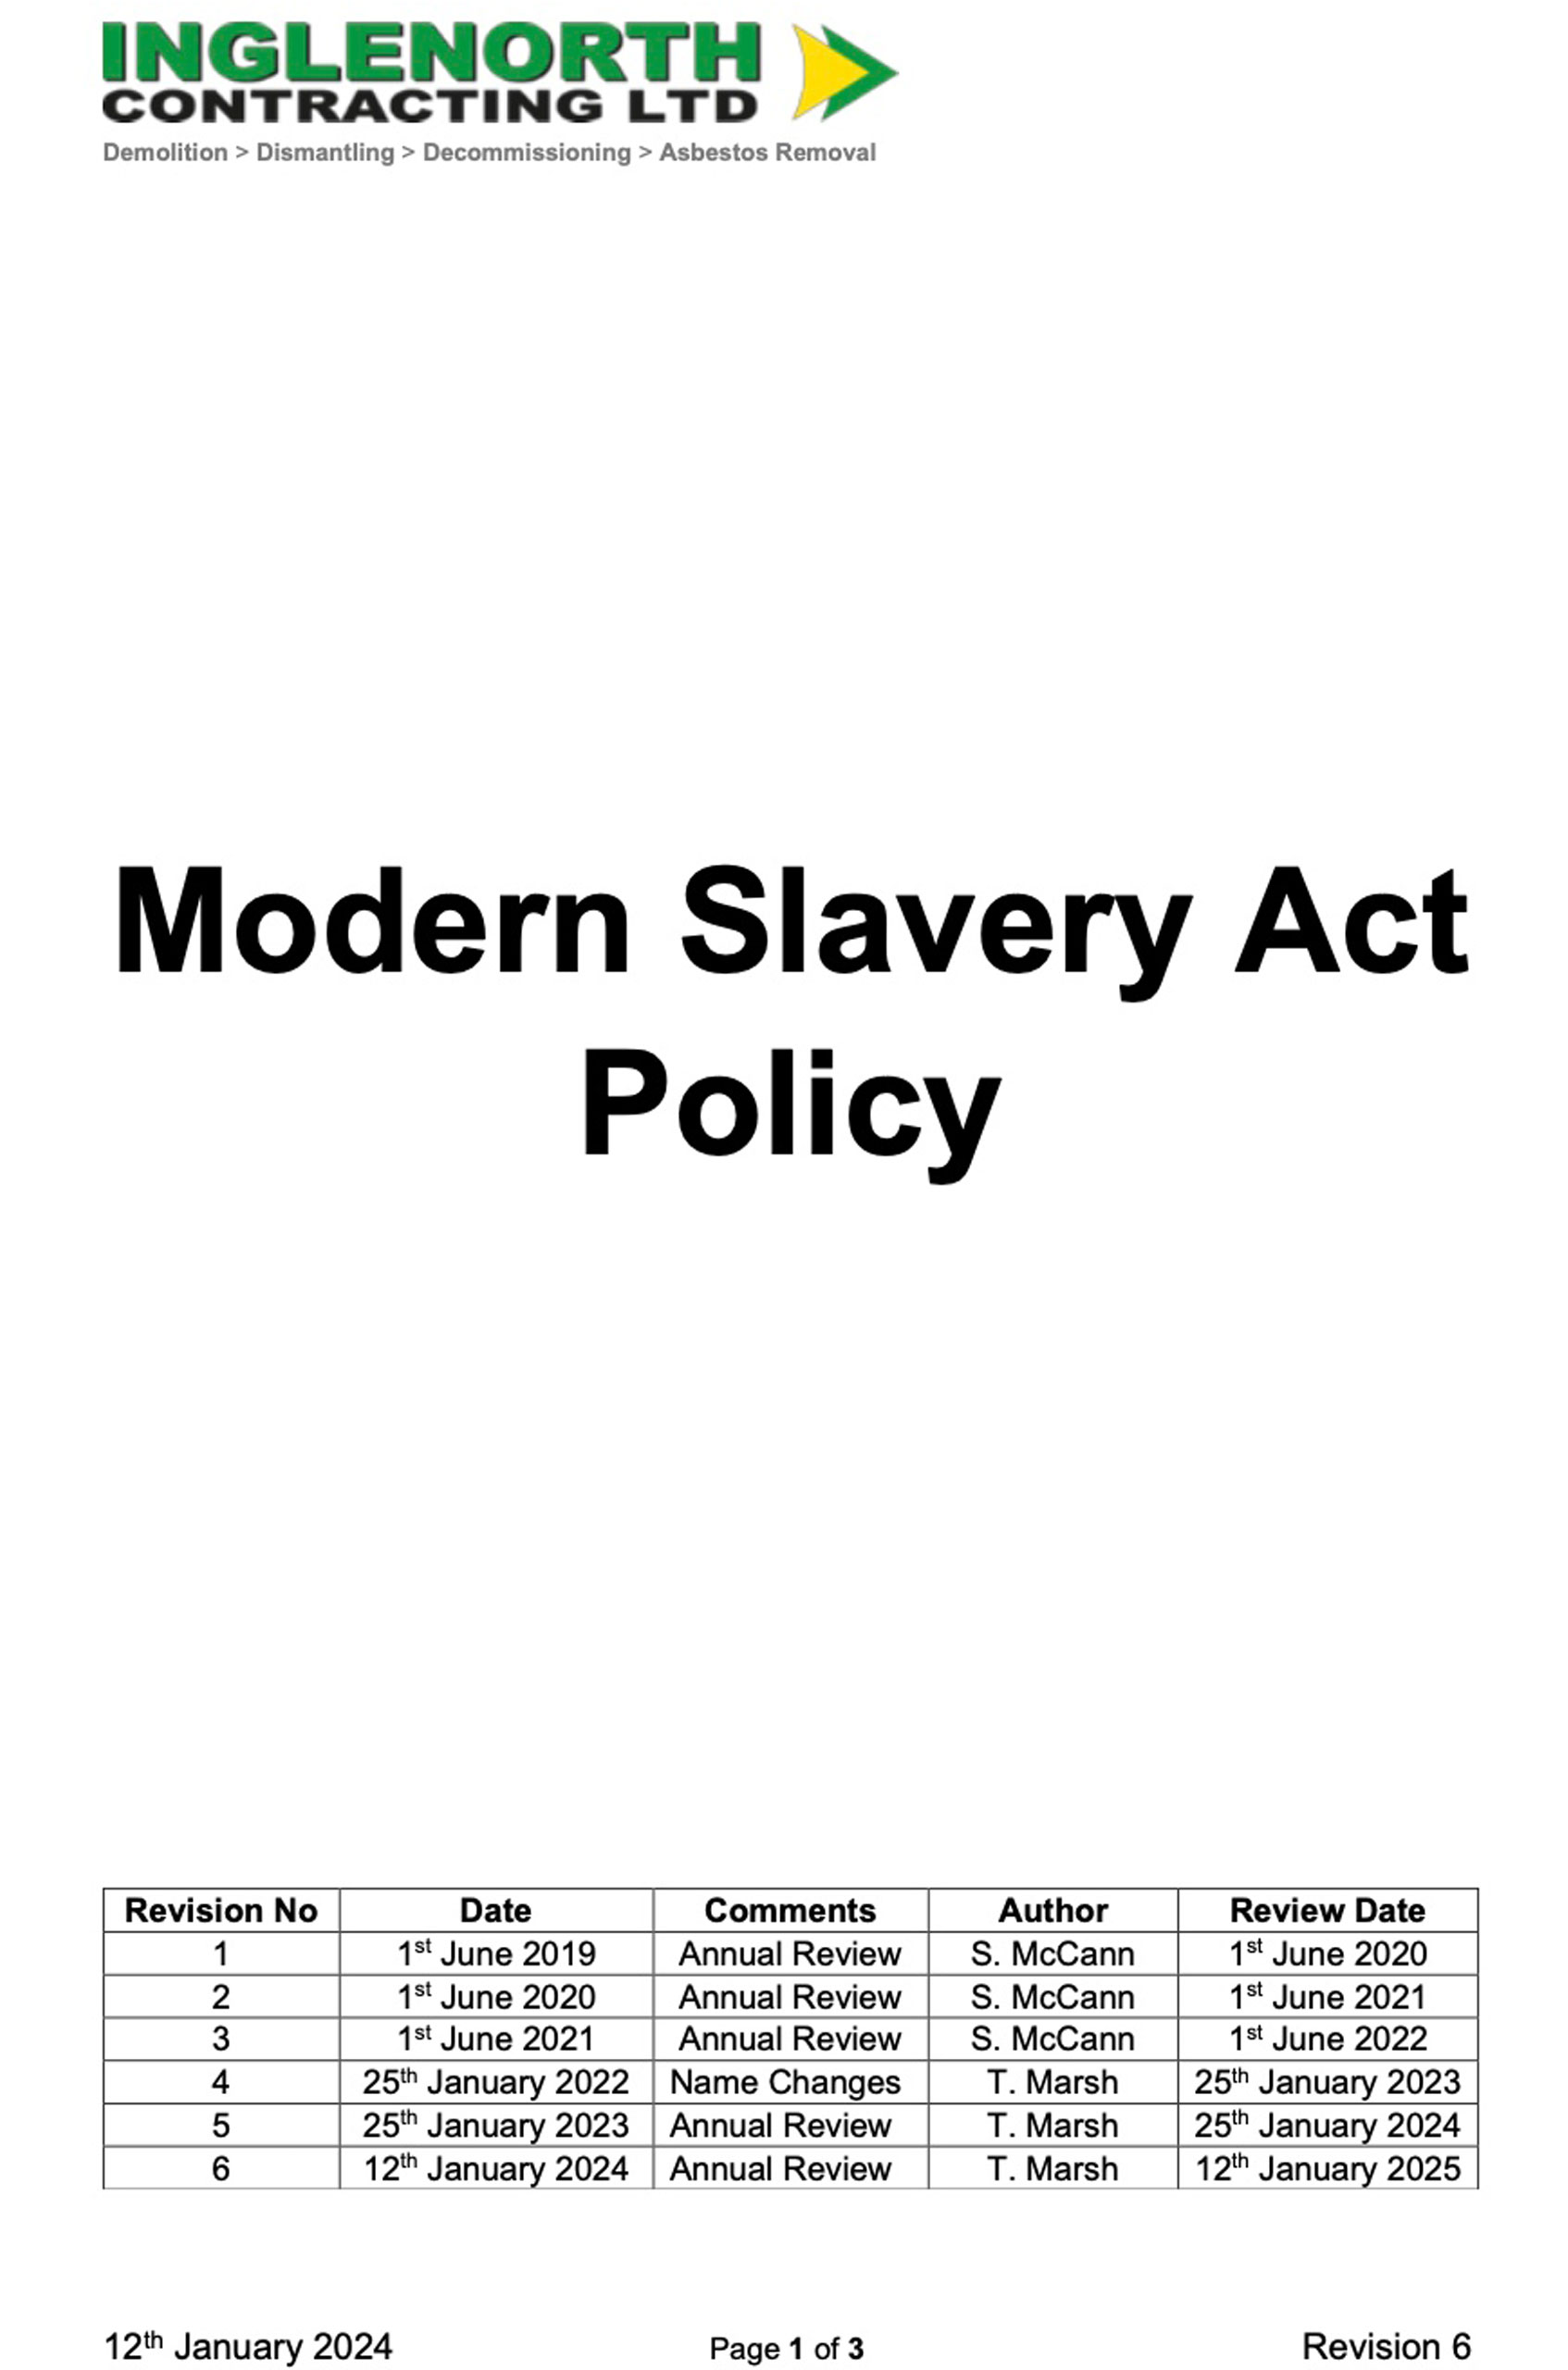 Modern Slavery Certificate